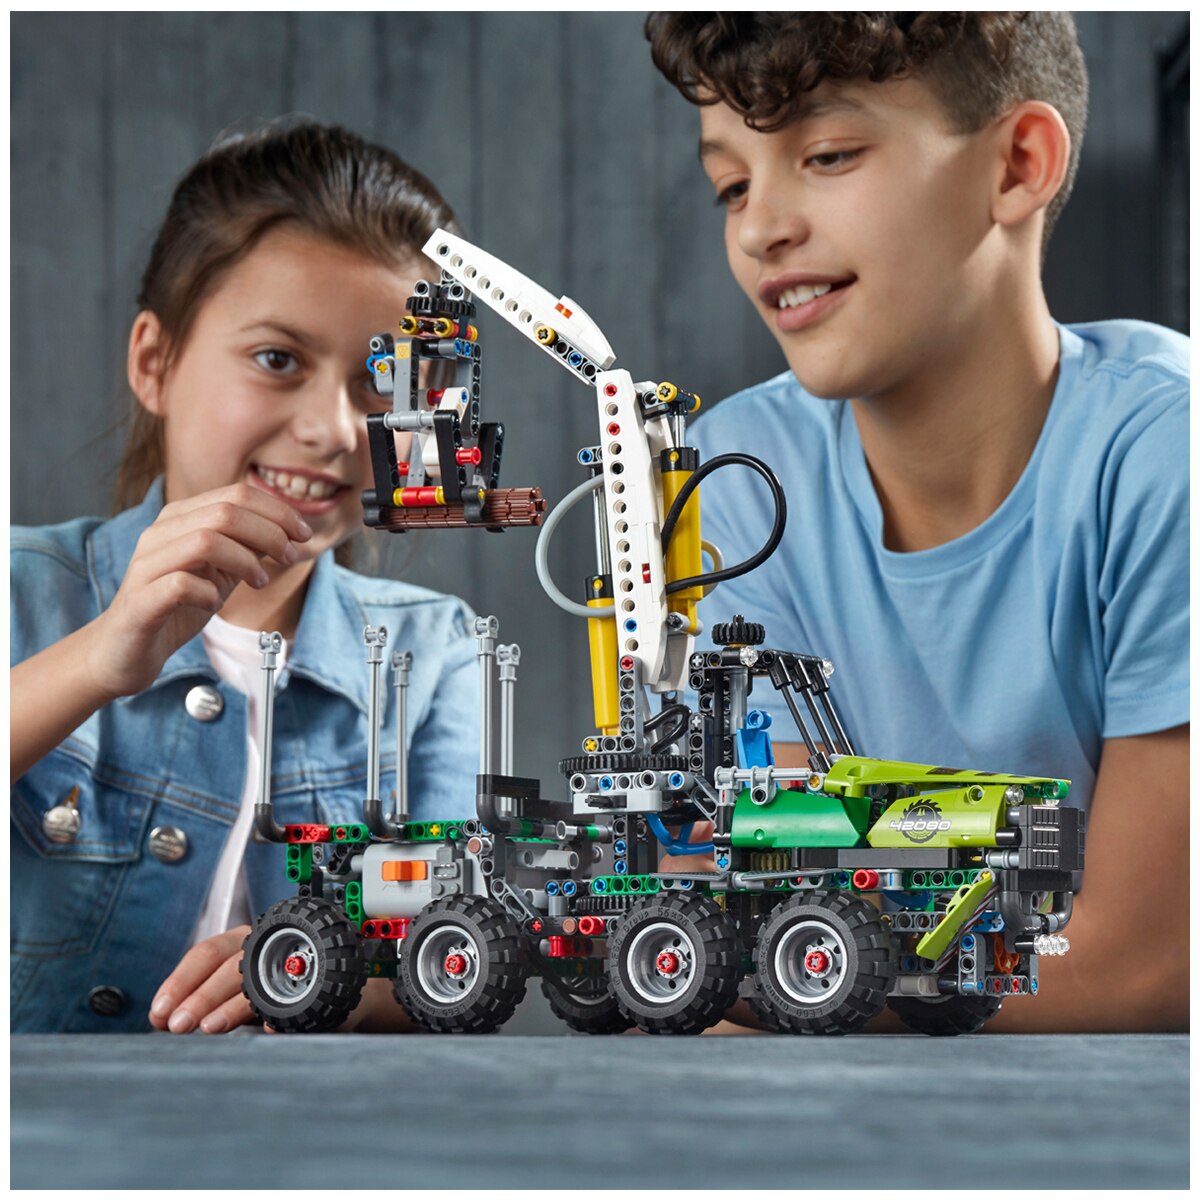 LEGO(R) Technic - Forest Machine